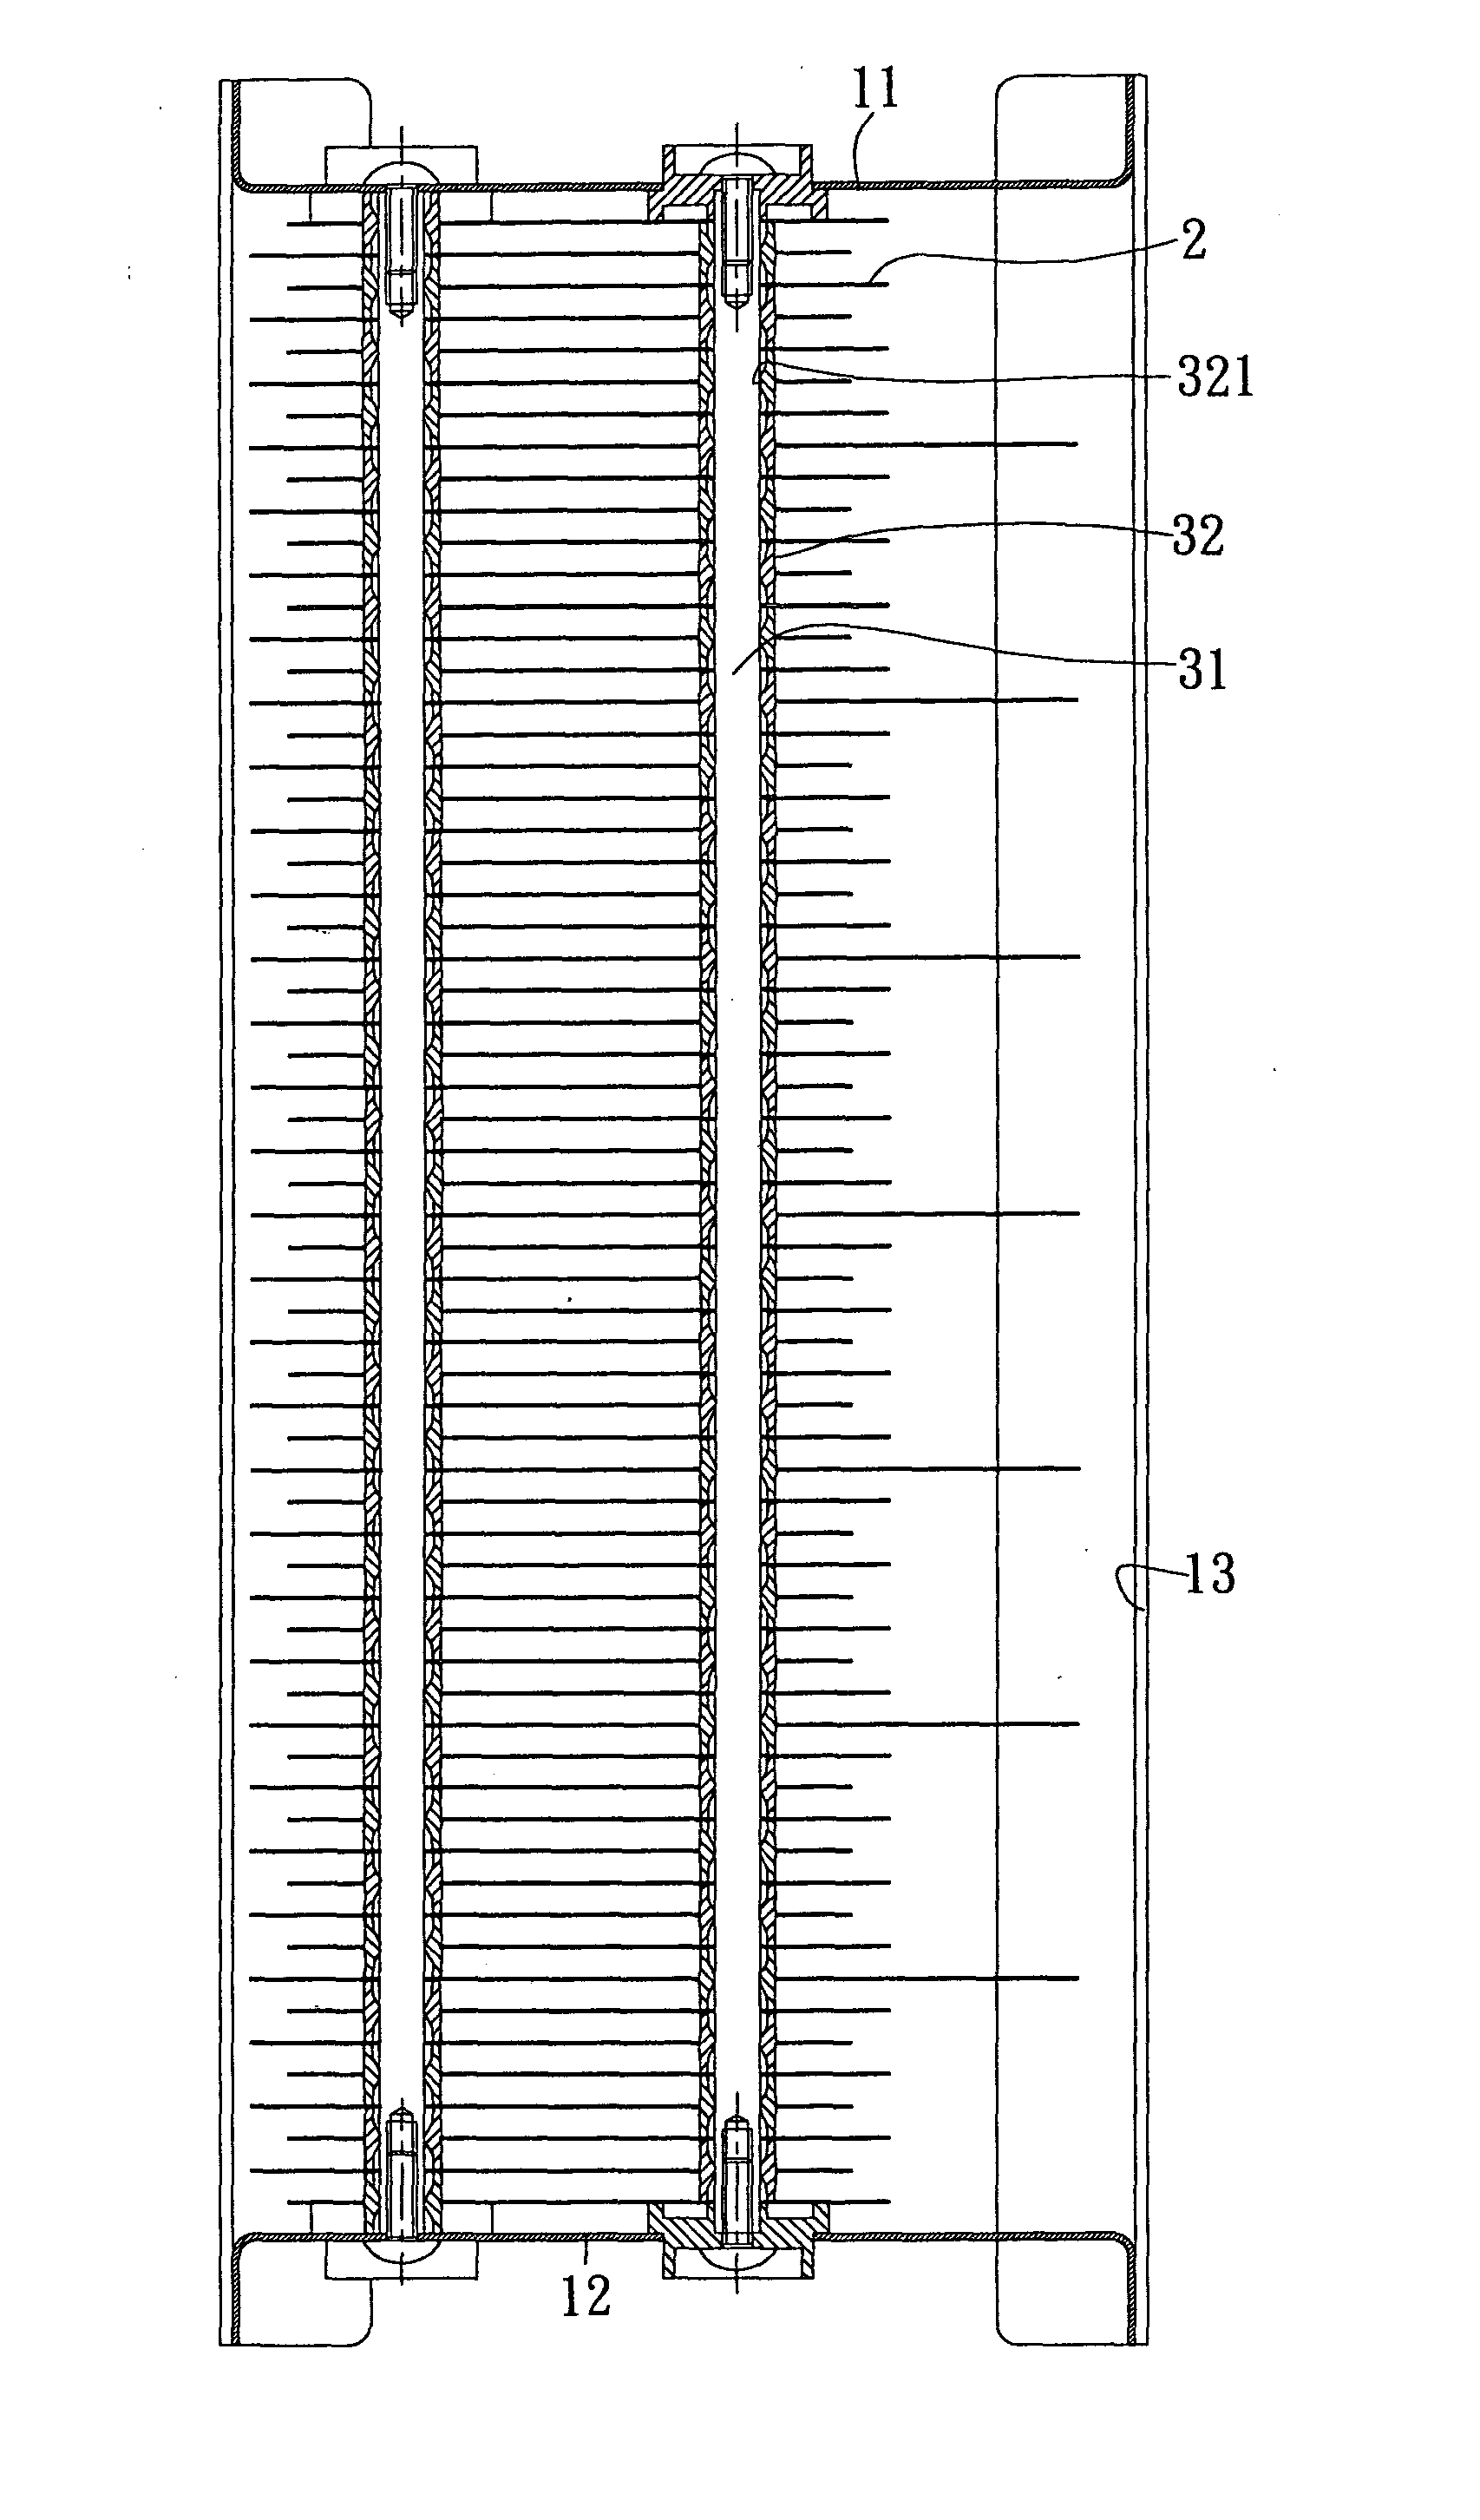 Frame structure of an electrostatic precipitator